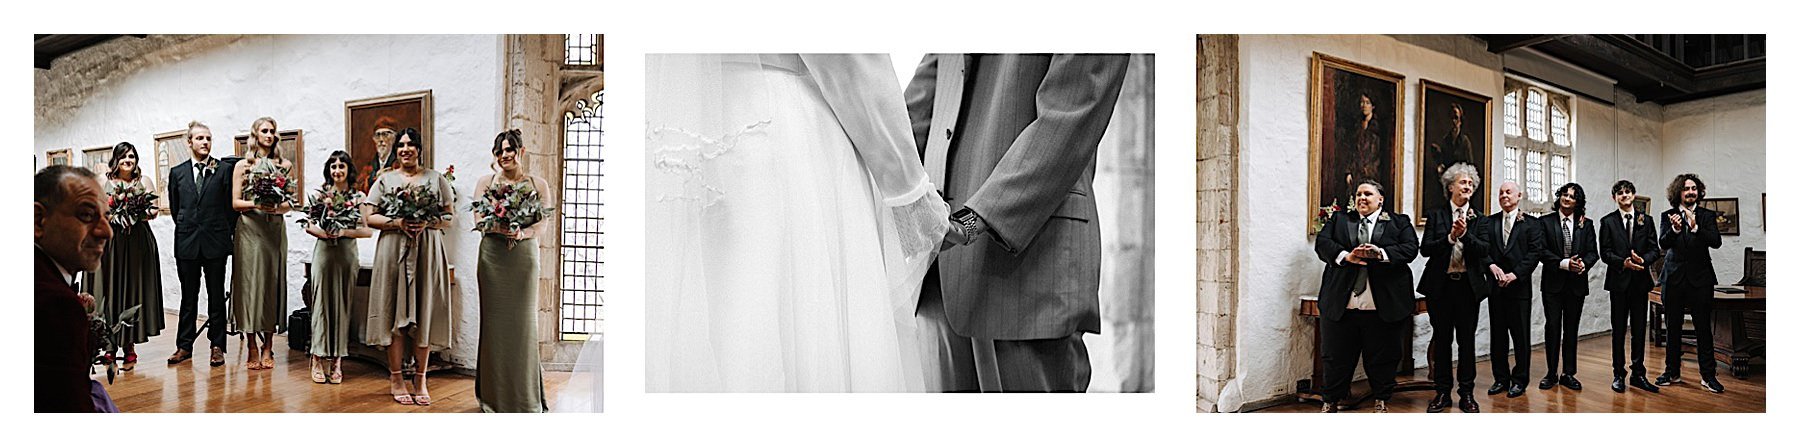 010 Montsalvat-wedding-photographer .jpg